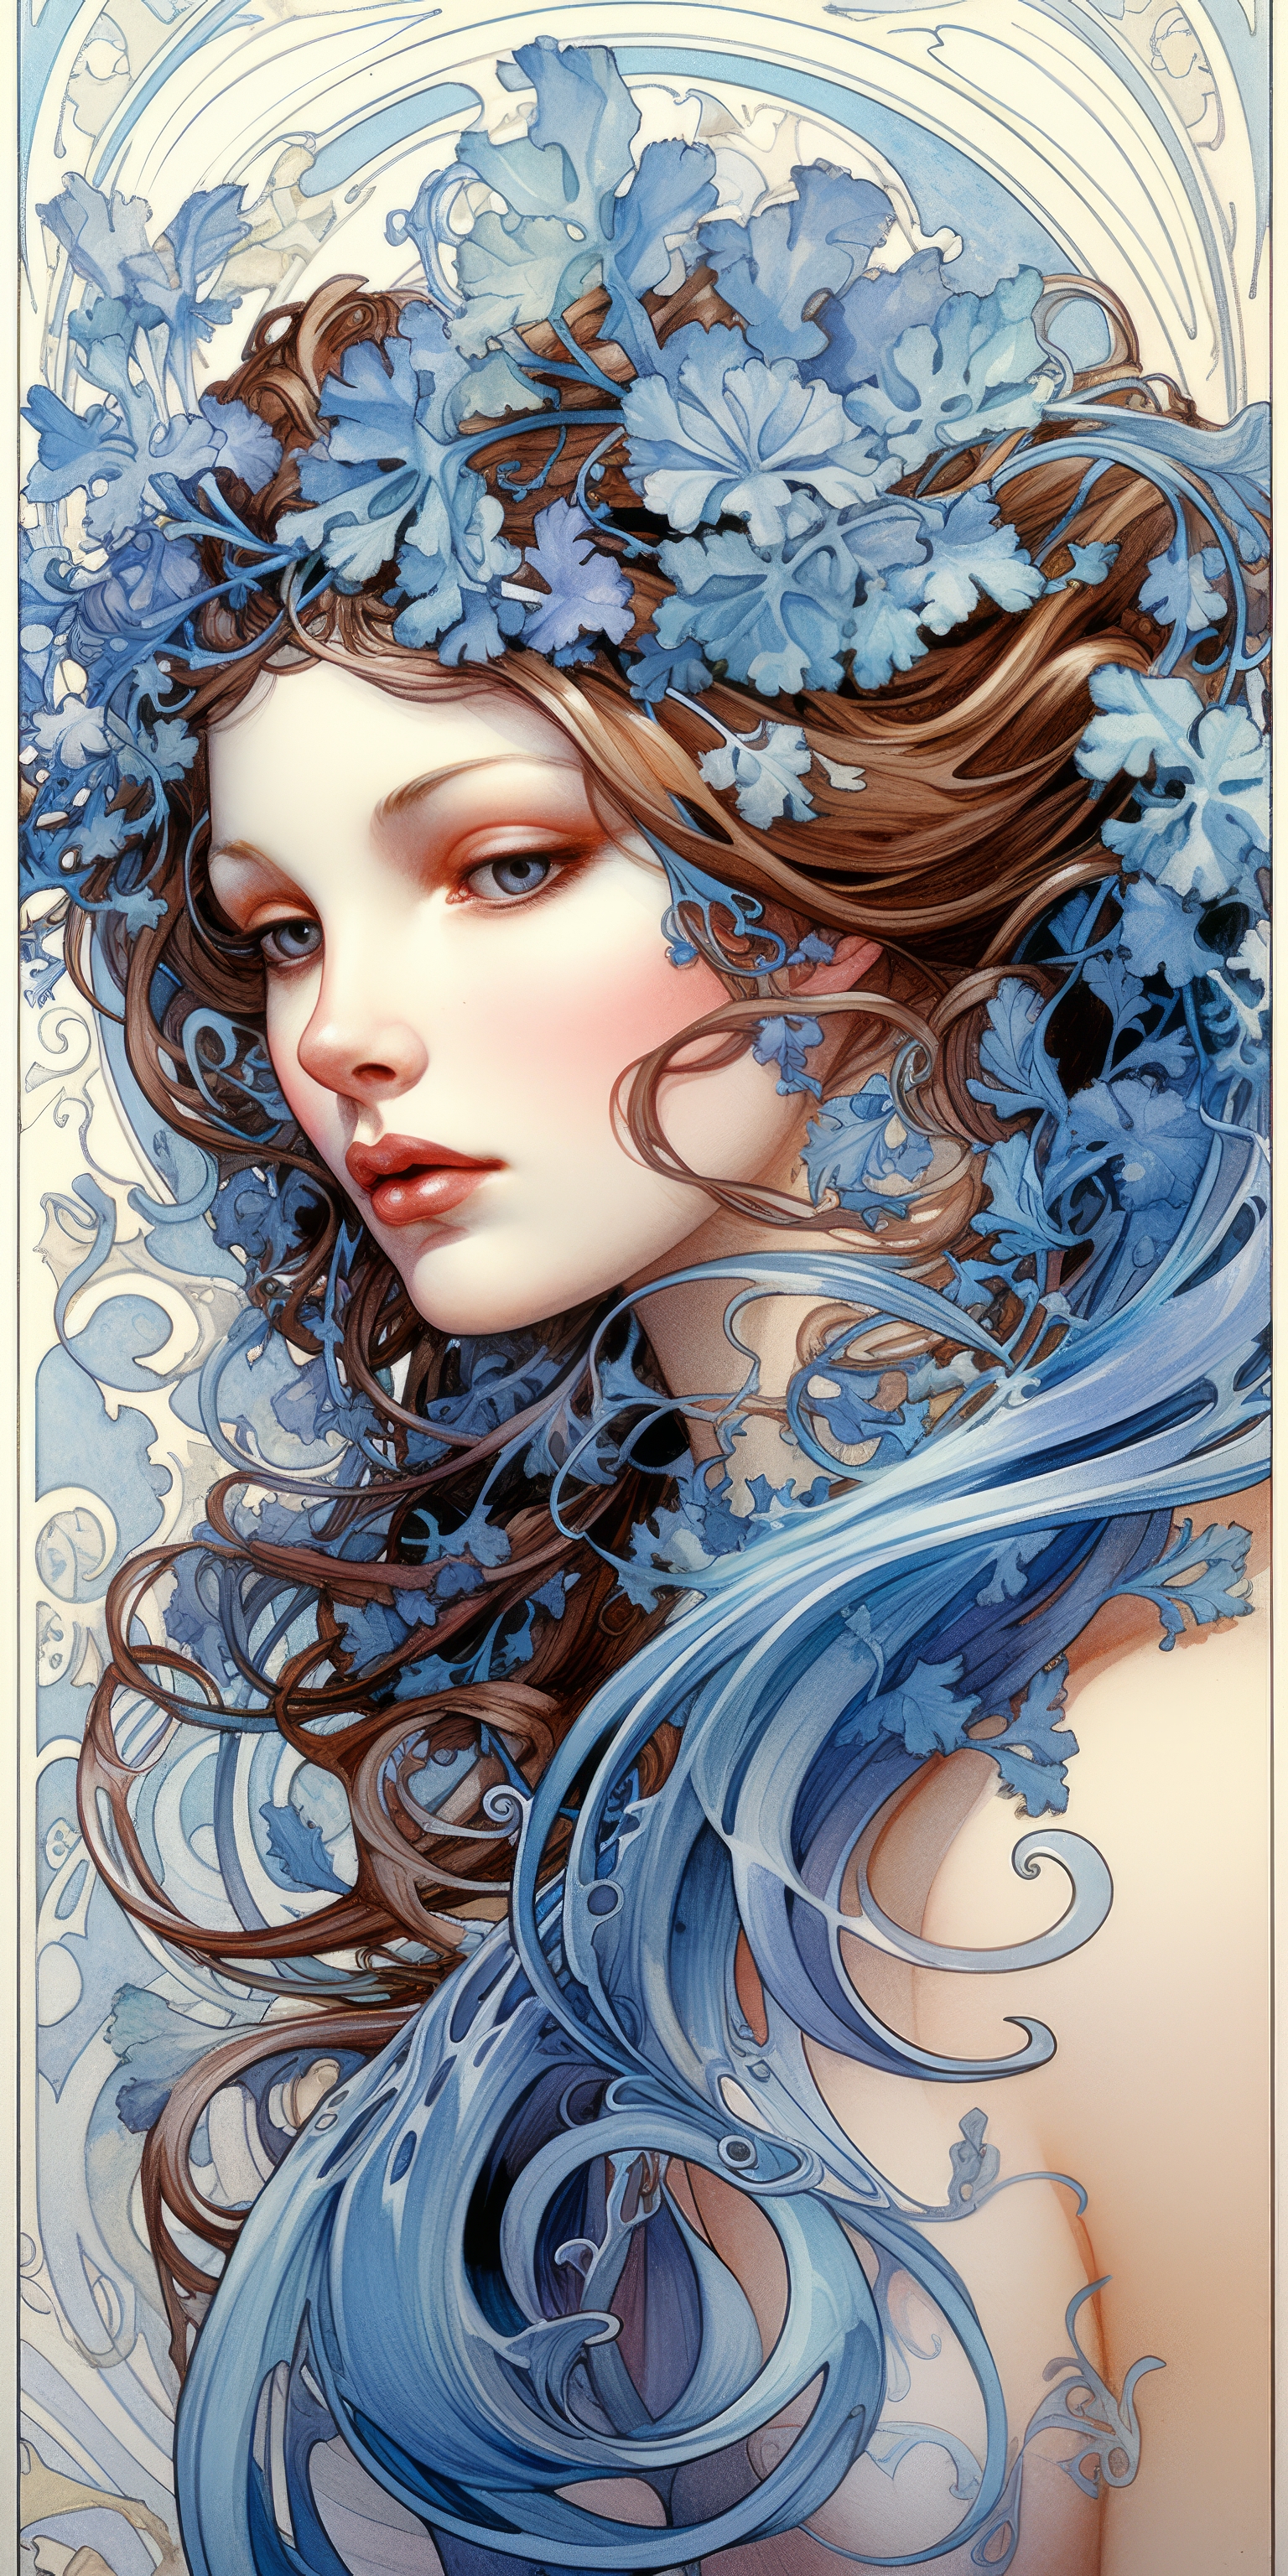 General 1536x3072 AI art women artwork Alphonse Mucha portrait display blue Art Nouveau digital art flower in hair long hair brunette blue eyes